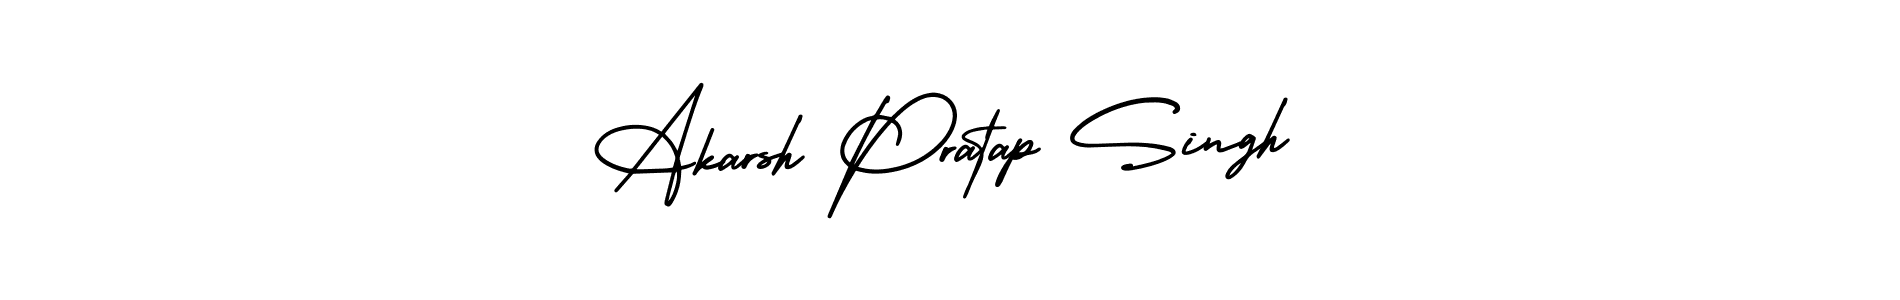 How to Draw Akarsh Pratap Singh signature style? AmerikaSignatureDemo-Regular is a latest design signature styles for name Akarsh Pratap Singh. Akarsh Pratap Singh signature style 3 images and pictures png